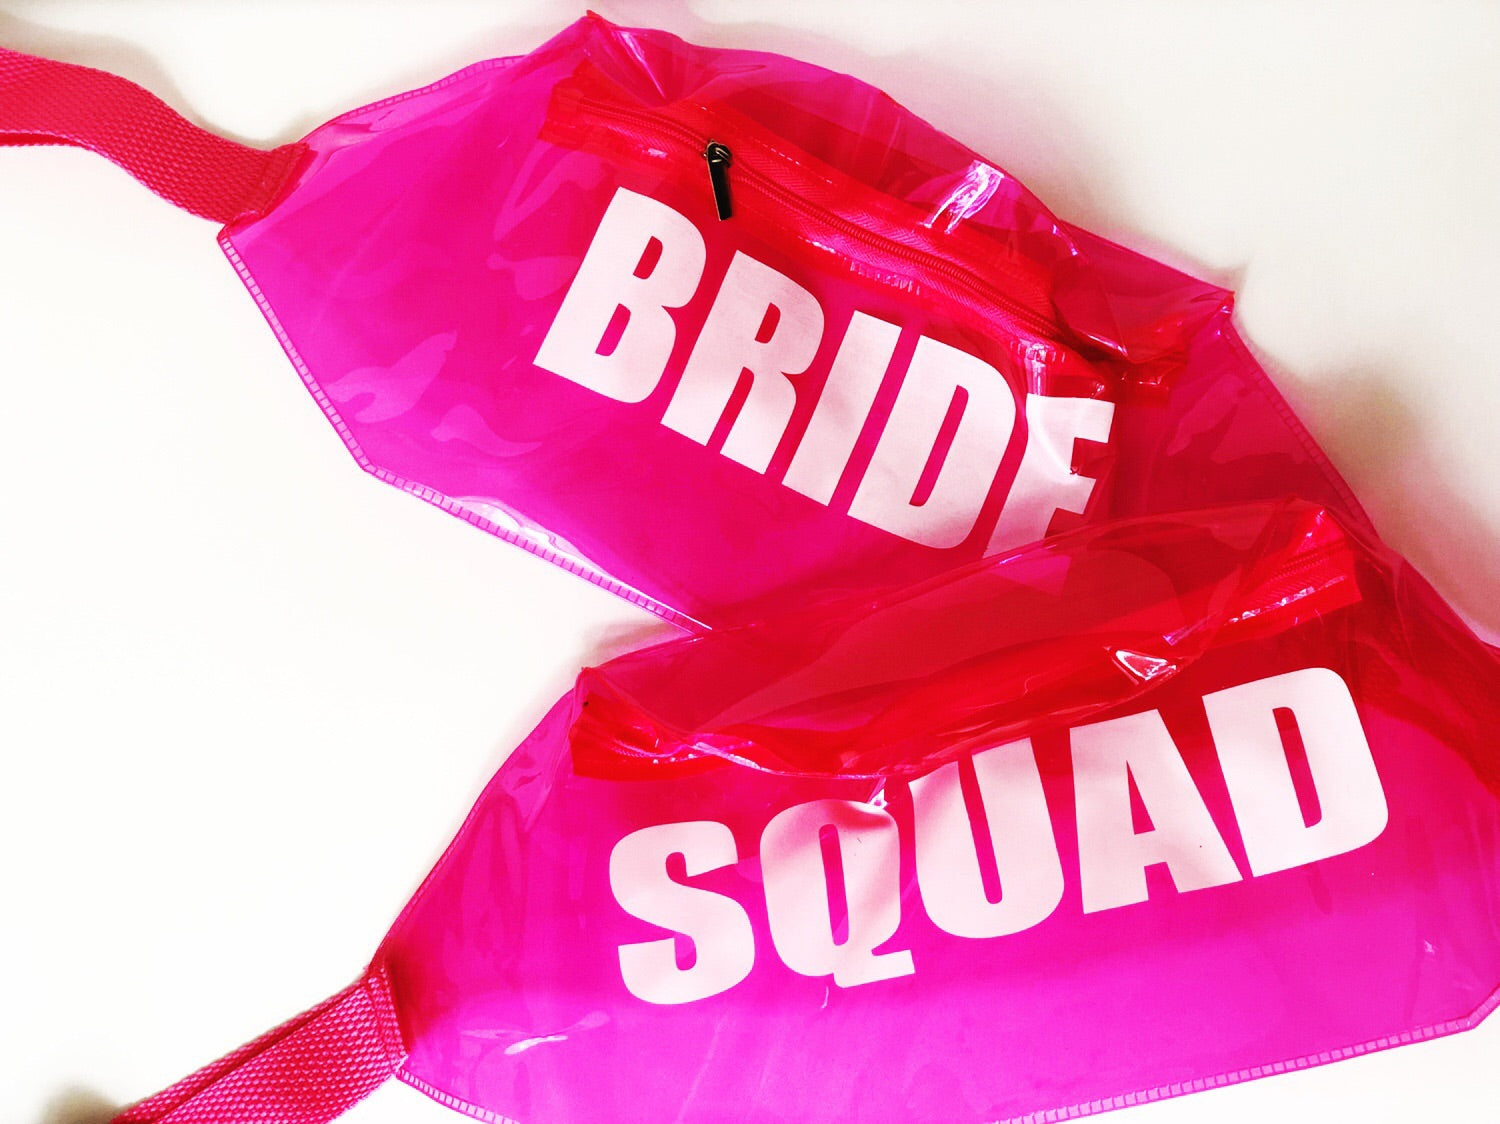 Team Bride Bachelorette Party Straws - 10 Pack